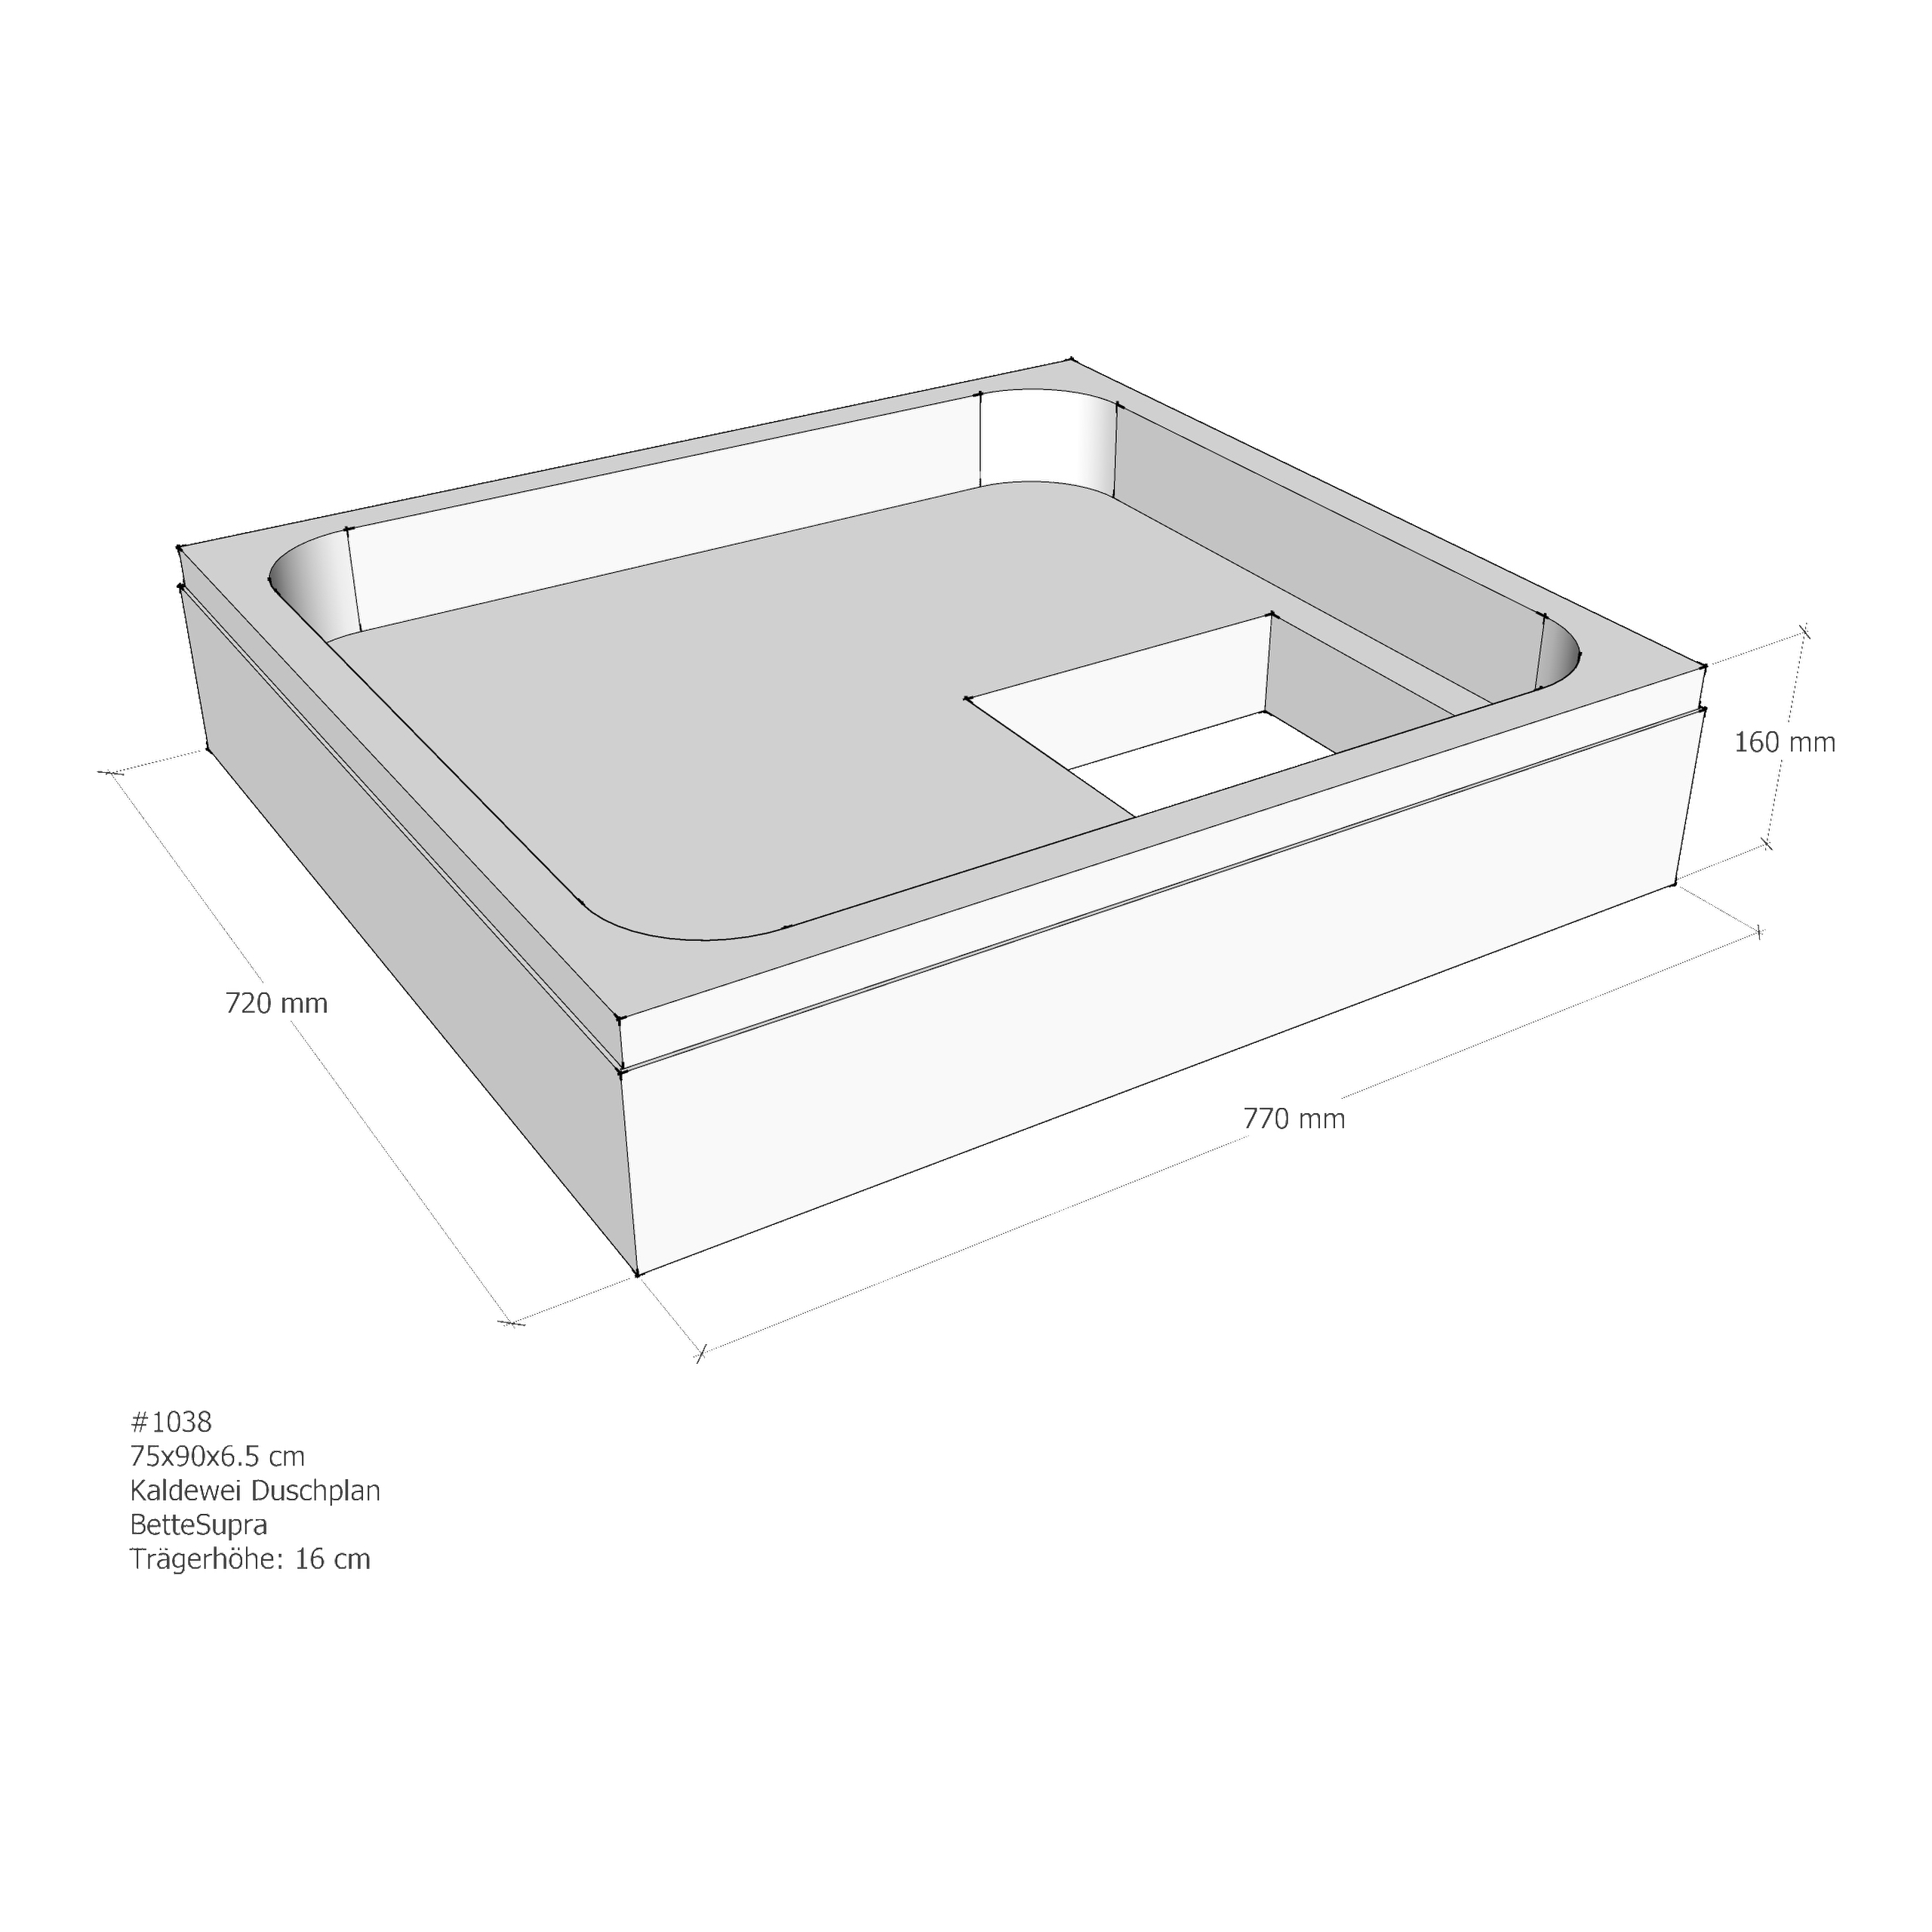 Duschwannenträger für BetteSupra, Kaldewei Duschplan 90 × 75 × 6,5 cm